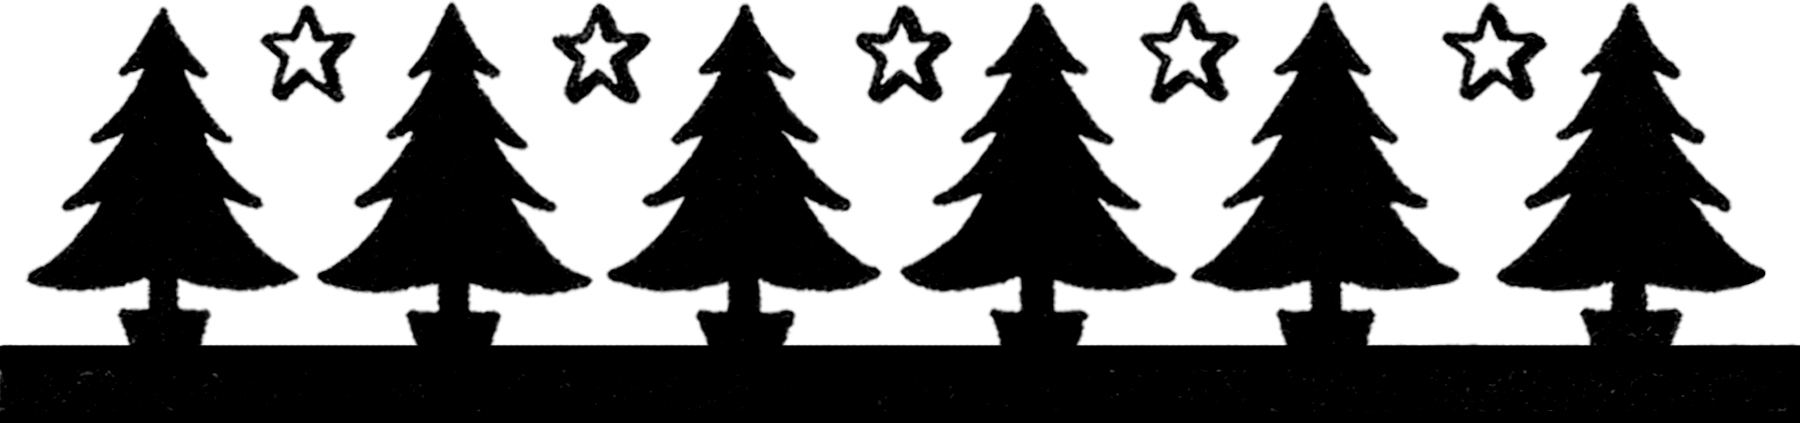 http://thegraphicsfairy.com/wp-content/uploads/2014/10/Christmas-Tree-Silhouette-Image-GraphicsFairy.jpg